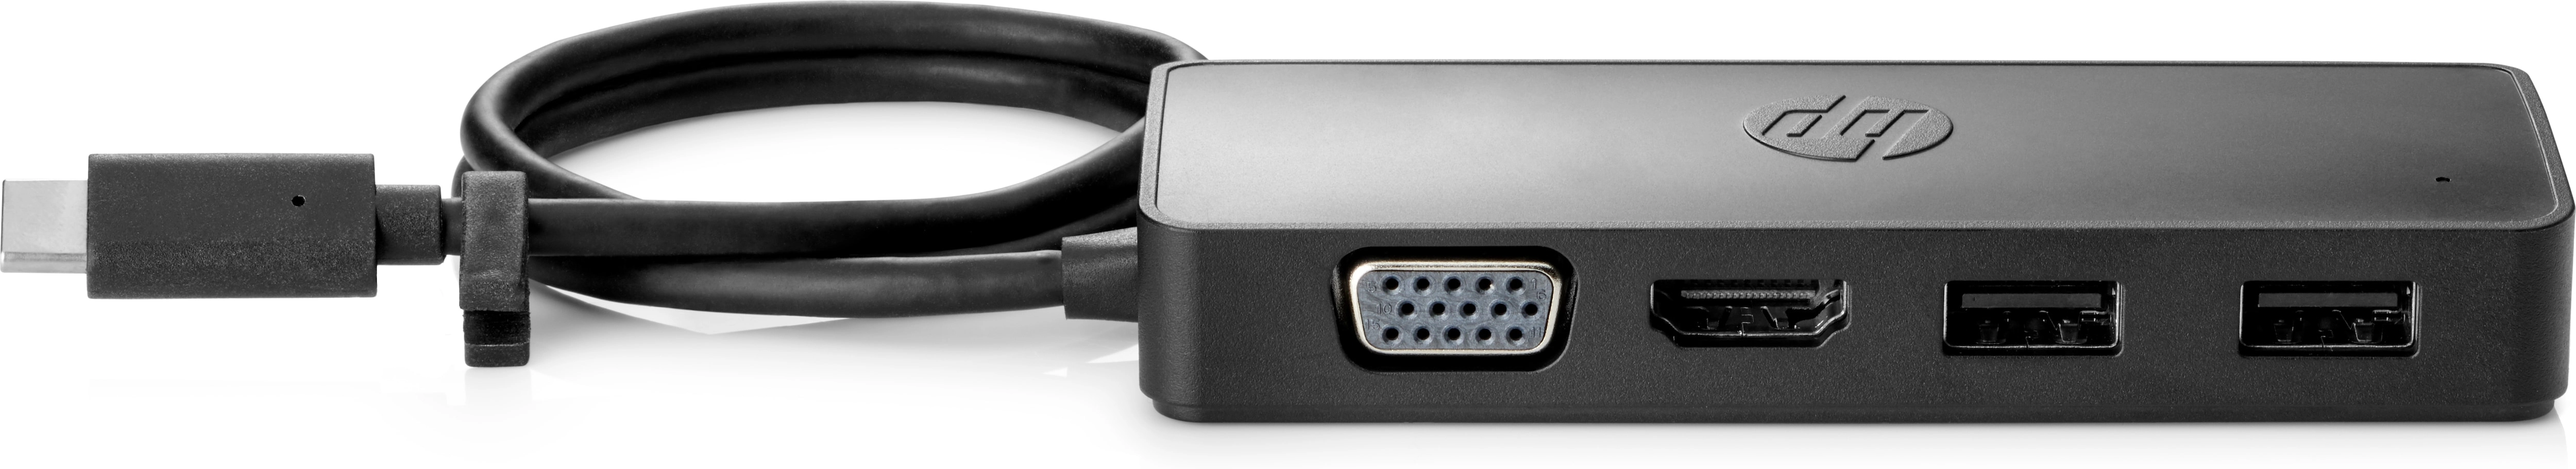 HP Travel Hub G2 - Port Replicator - USB-C - VGA, HDMI